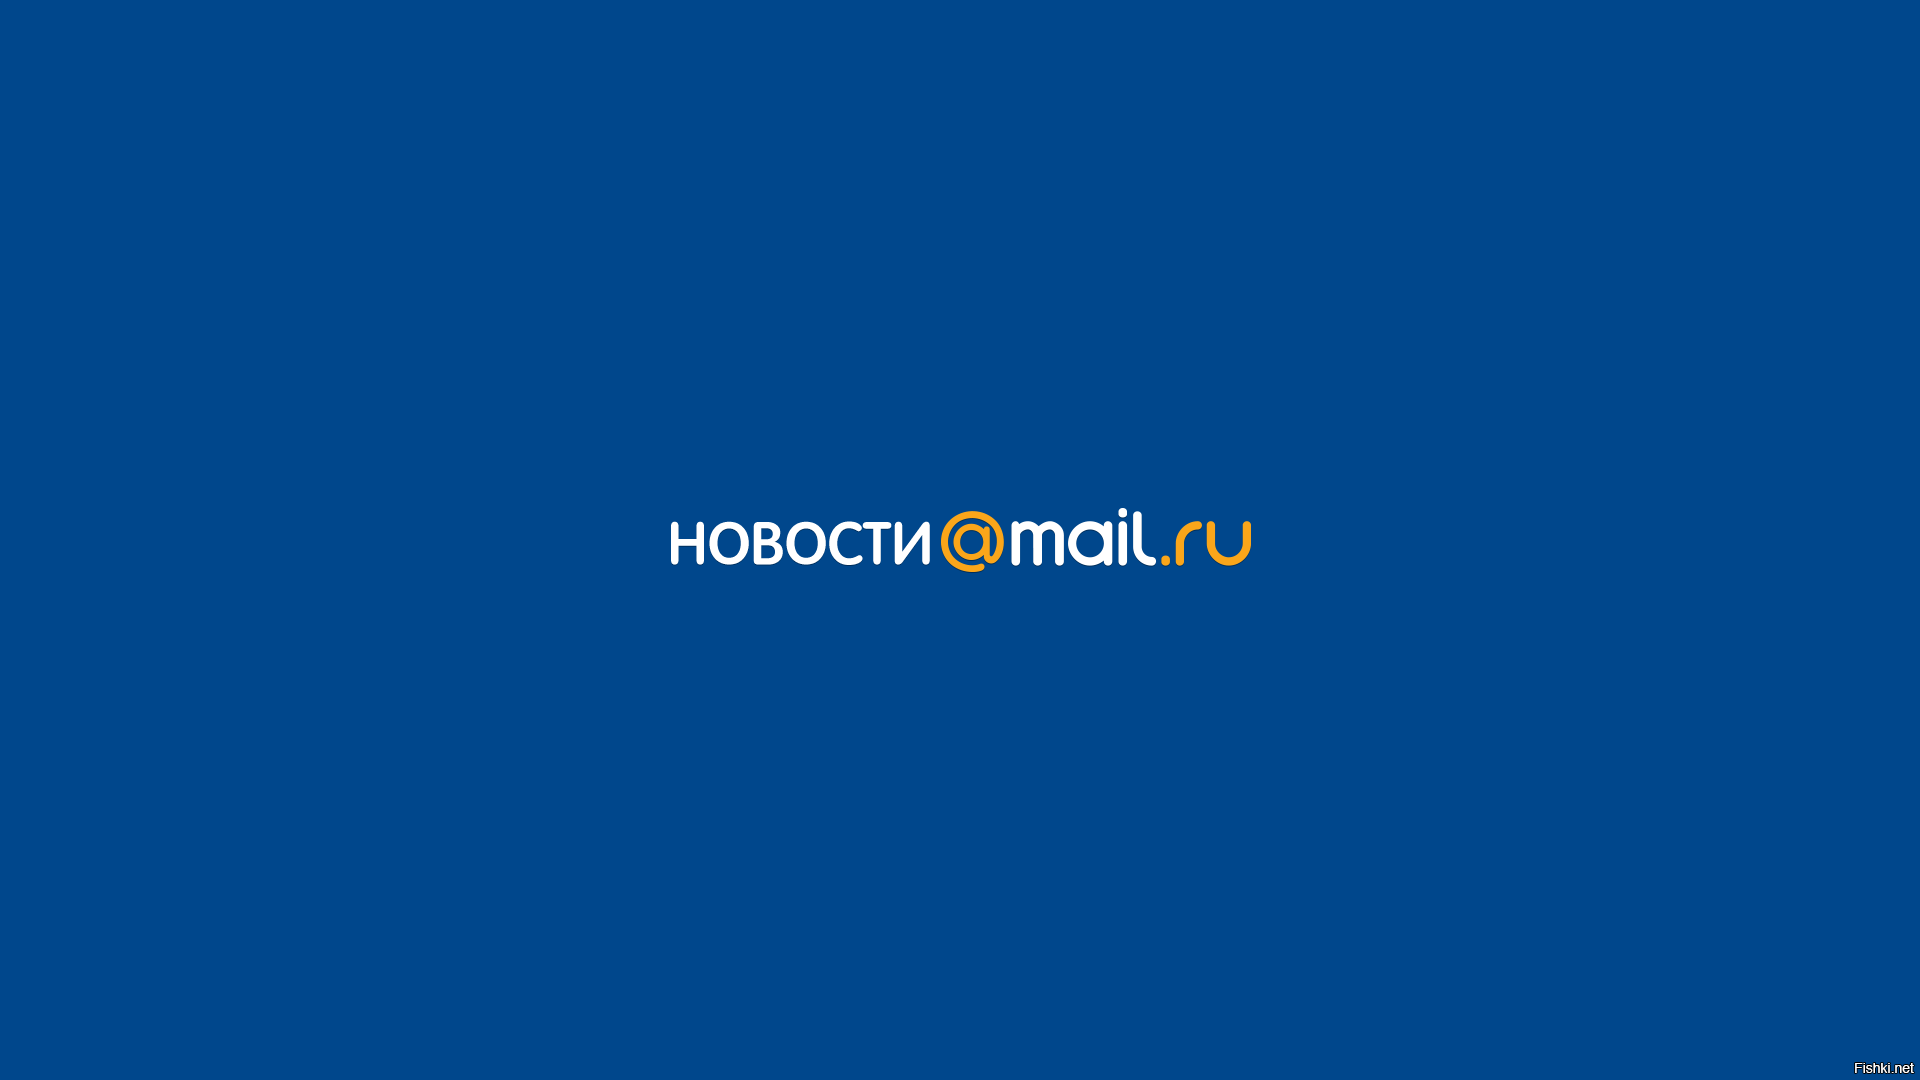 Красивый mail ru. Майл новости. Почта mail.ru новости. Лого новости майл ру.